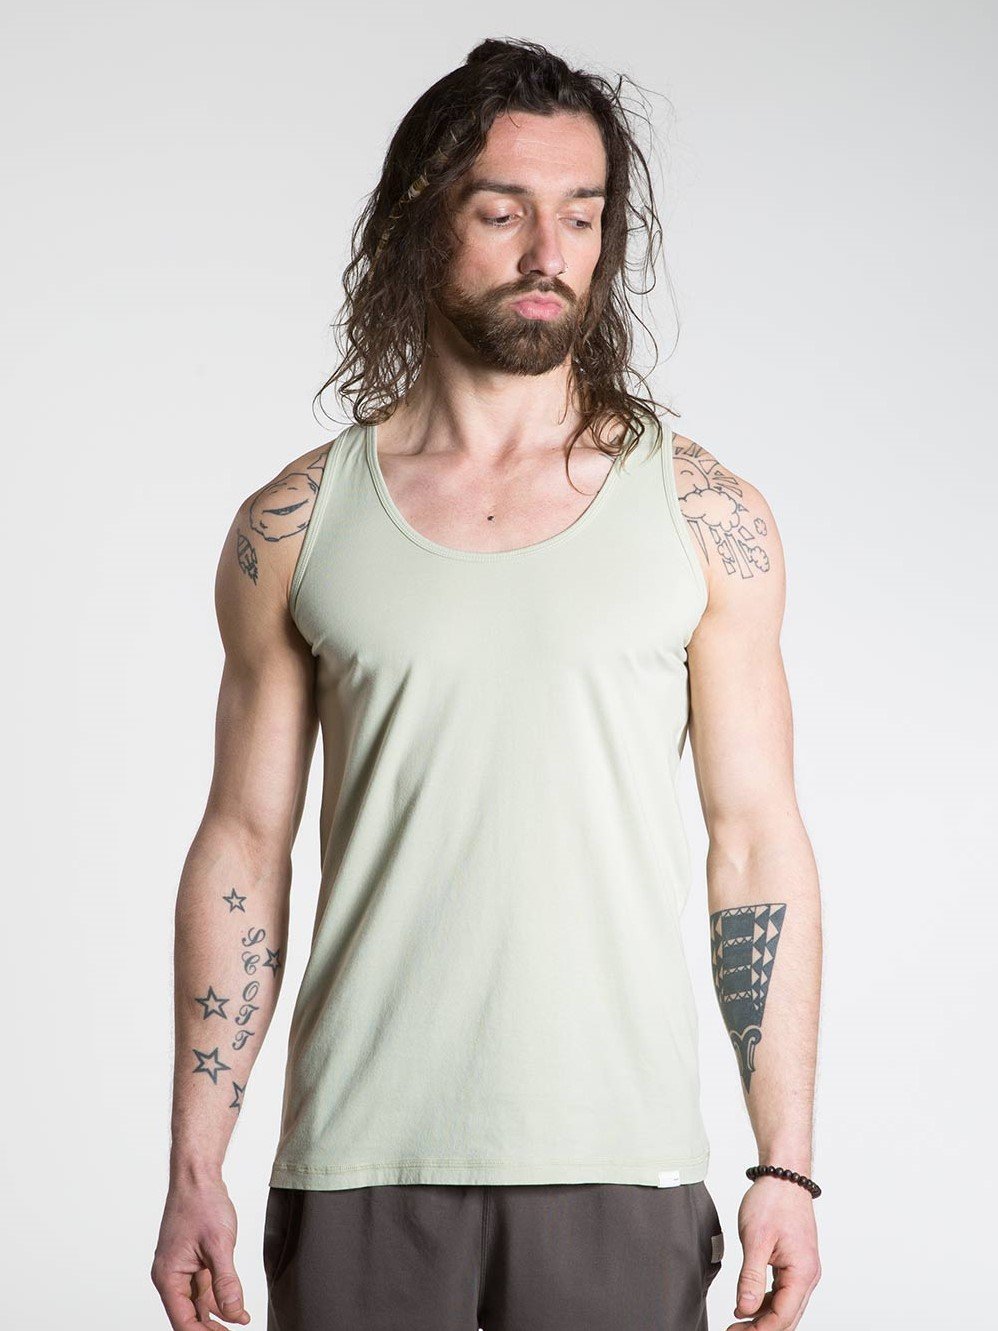 SO WE FLOW... soweflow... Sleeveless Top Men's Yoga Vest Tank Top Pale Green - Activemen Clothing